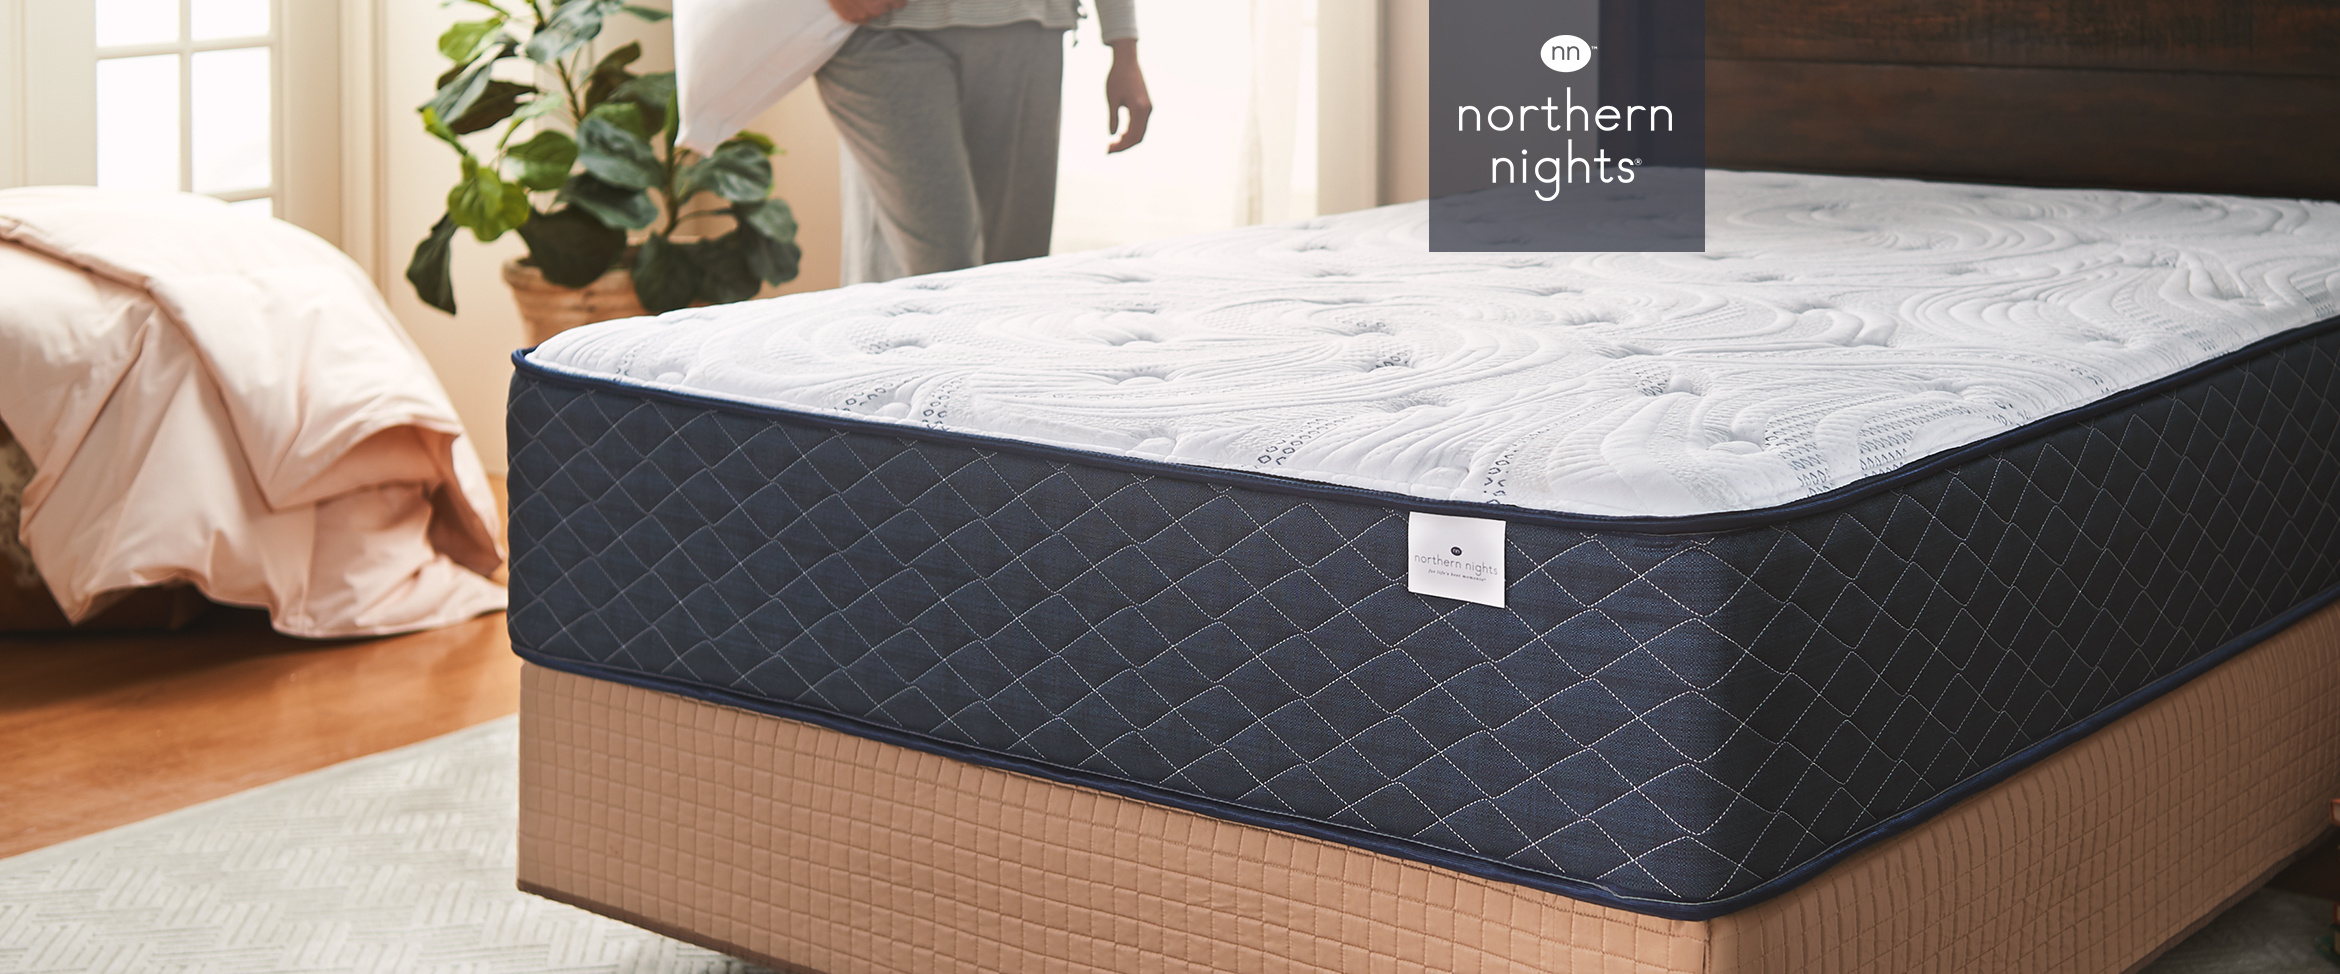 northern nights king dream hybrid mattress